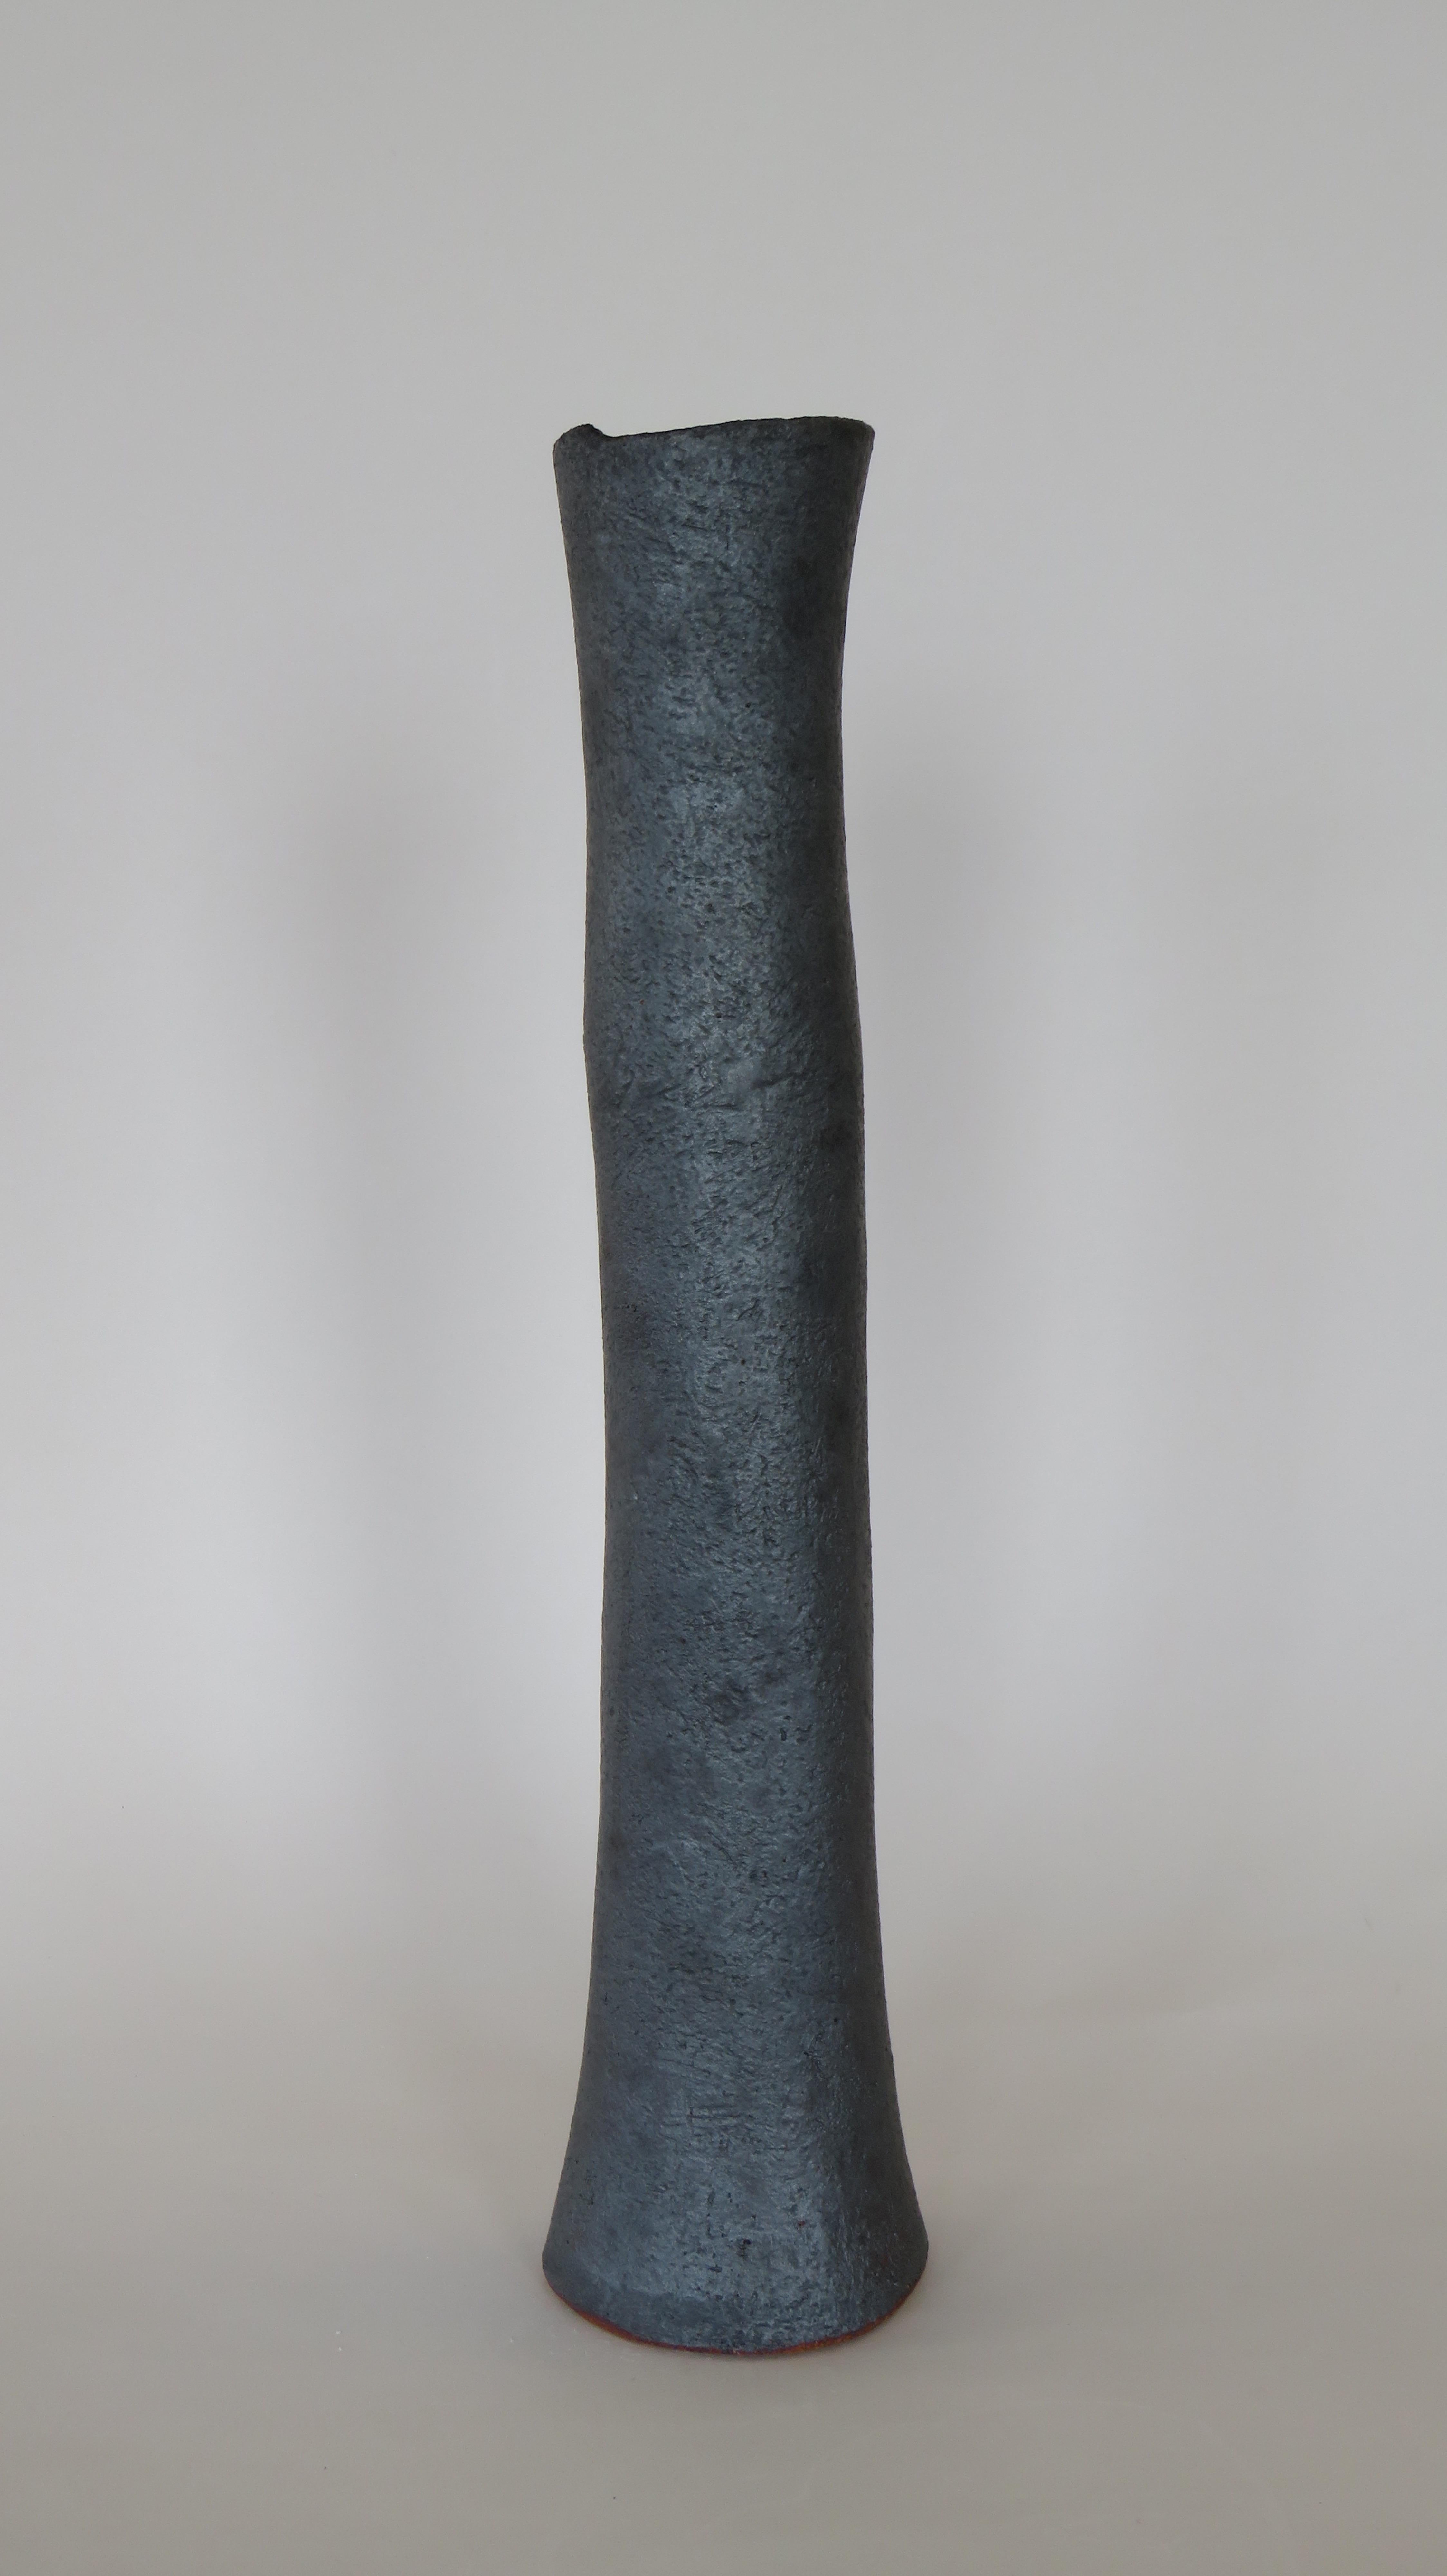 Tall, Tubular Metallic Black Ceramic Stoneware Vase, Hand Built 19 Inches Tall (amerikanisch)